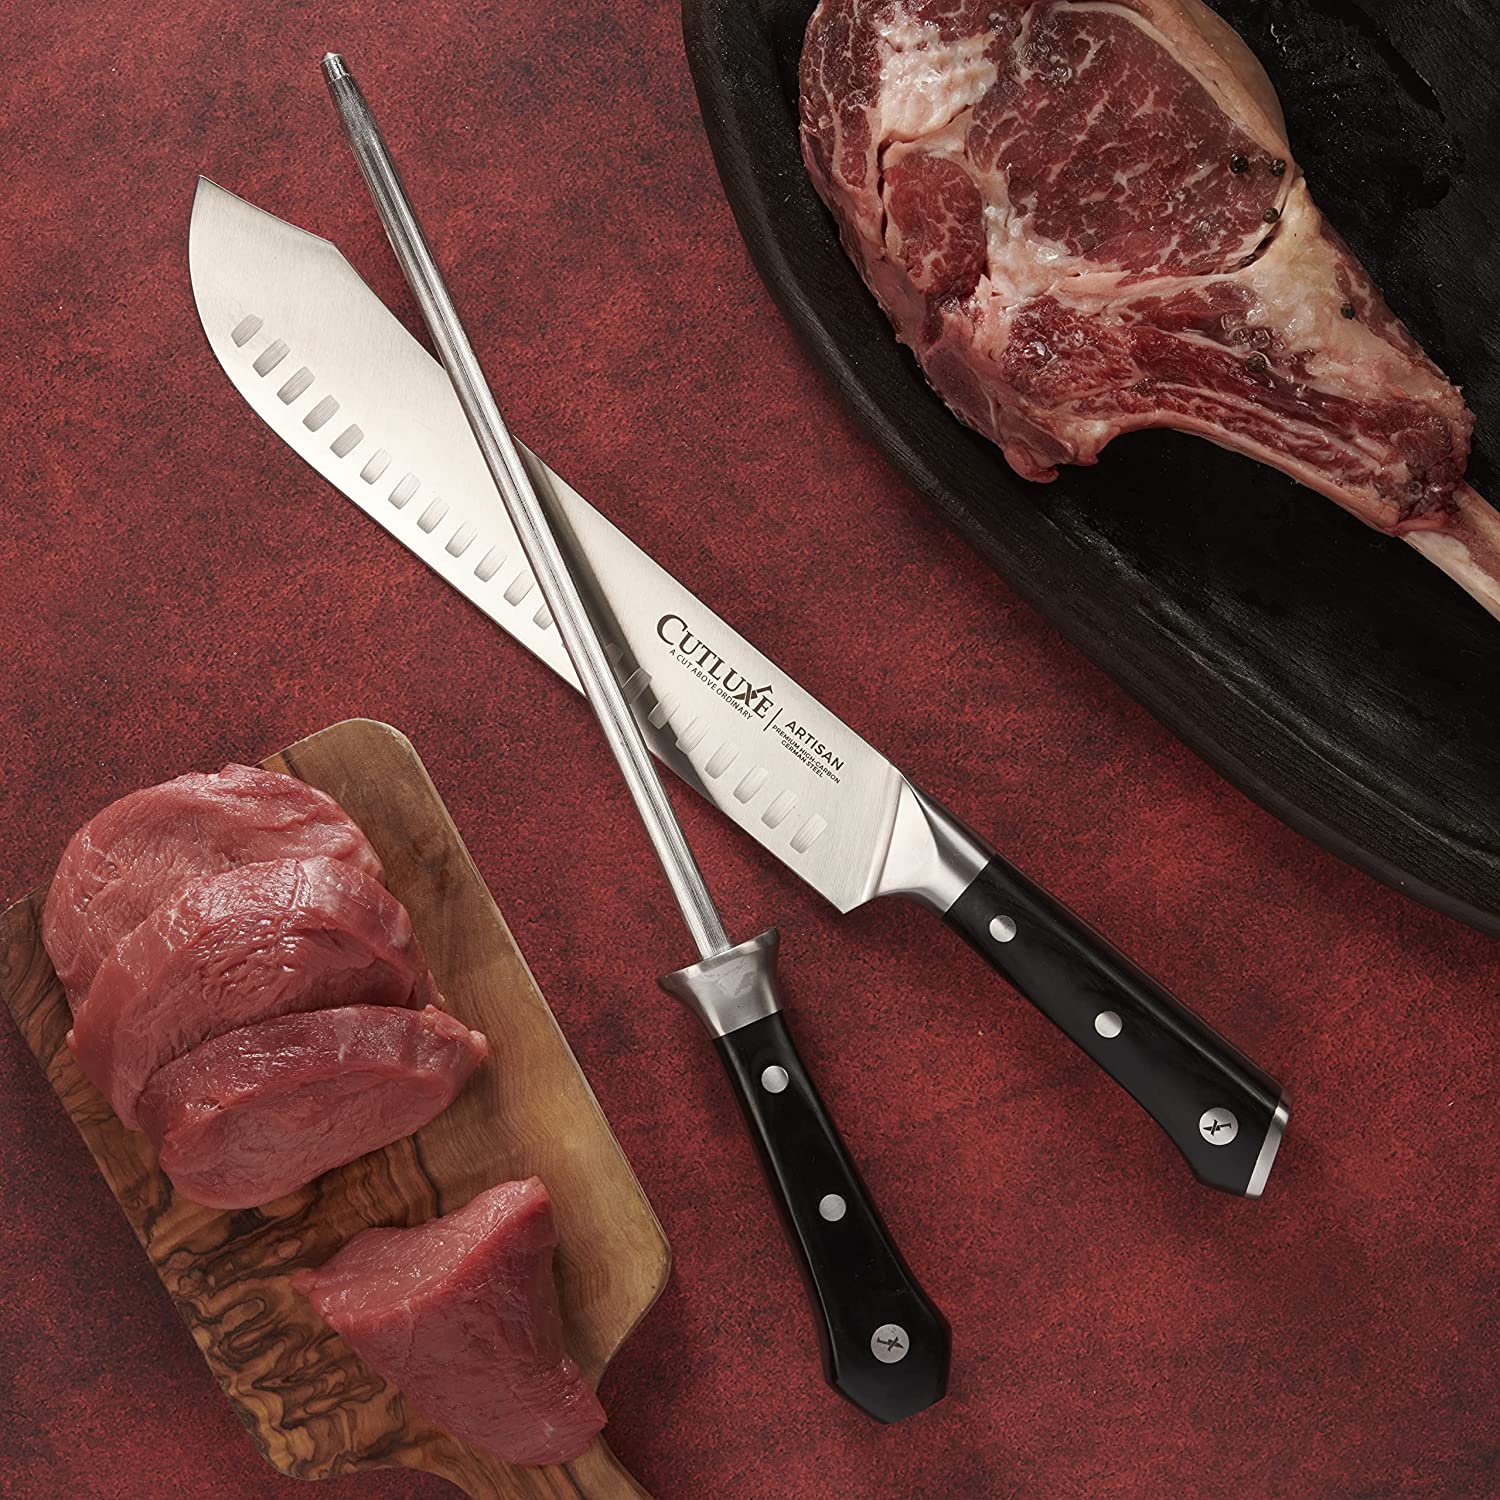 UberSchnitt Carbon Steel 10 Inch Knife Honing Rod + Knife Guard Complete  Kit 